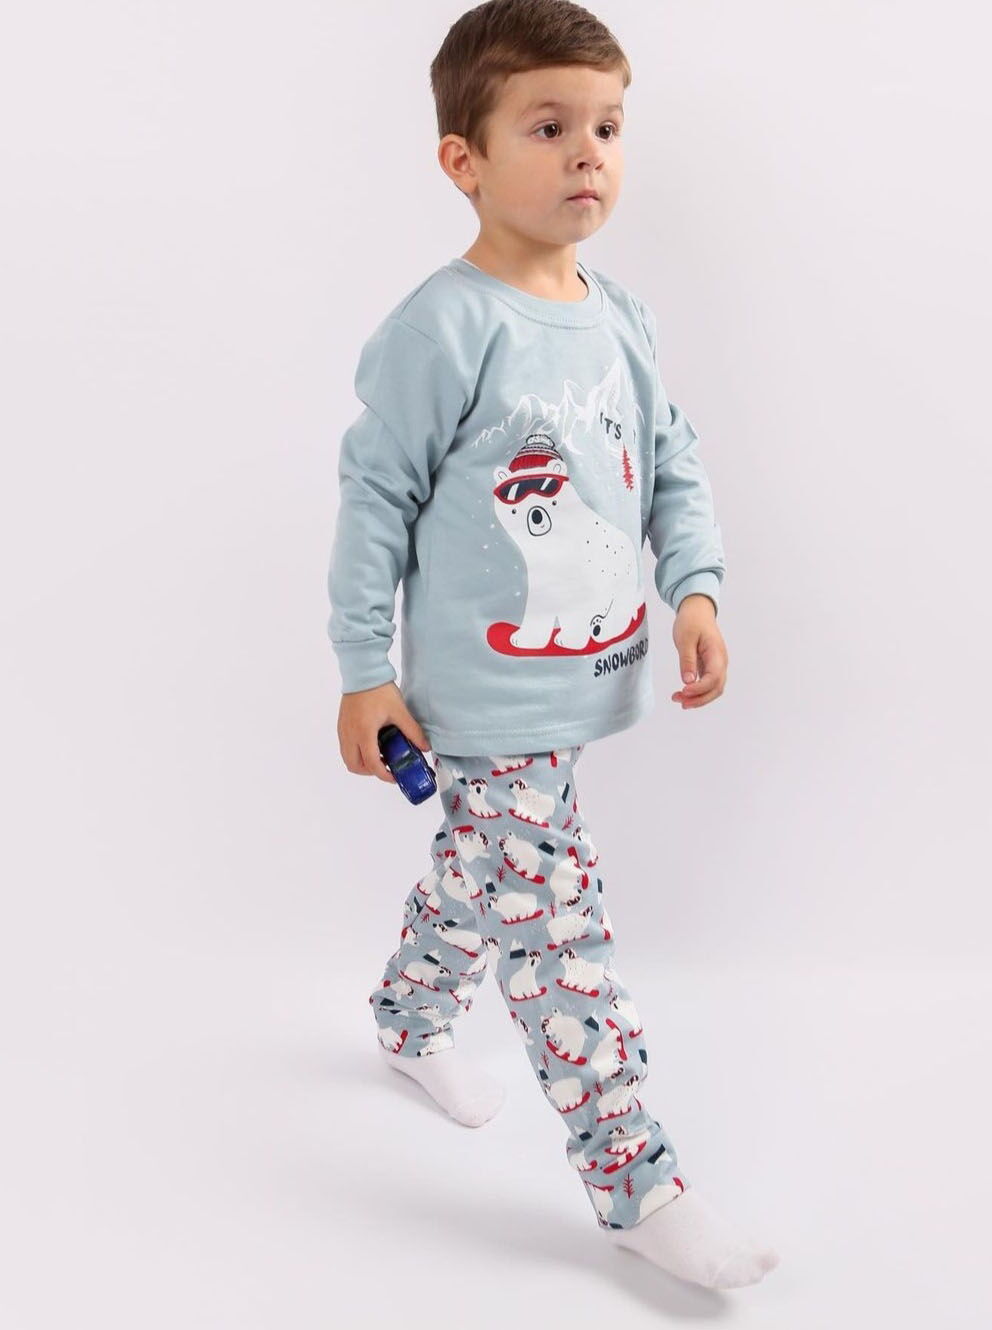 Утепленная пижама для мальчика Фламинго Мишка Snowboard серая 329-033 - цена